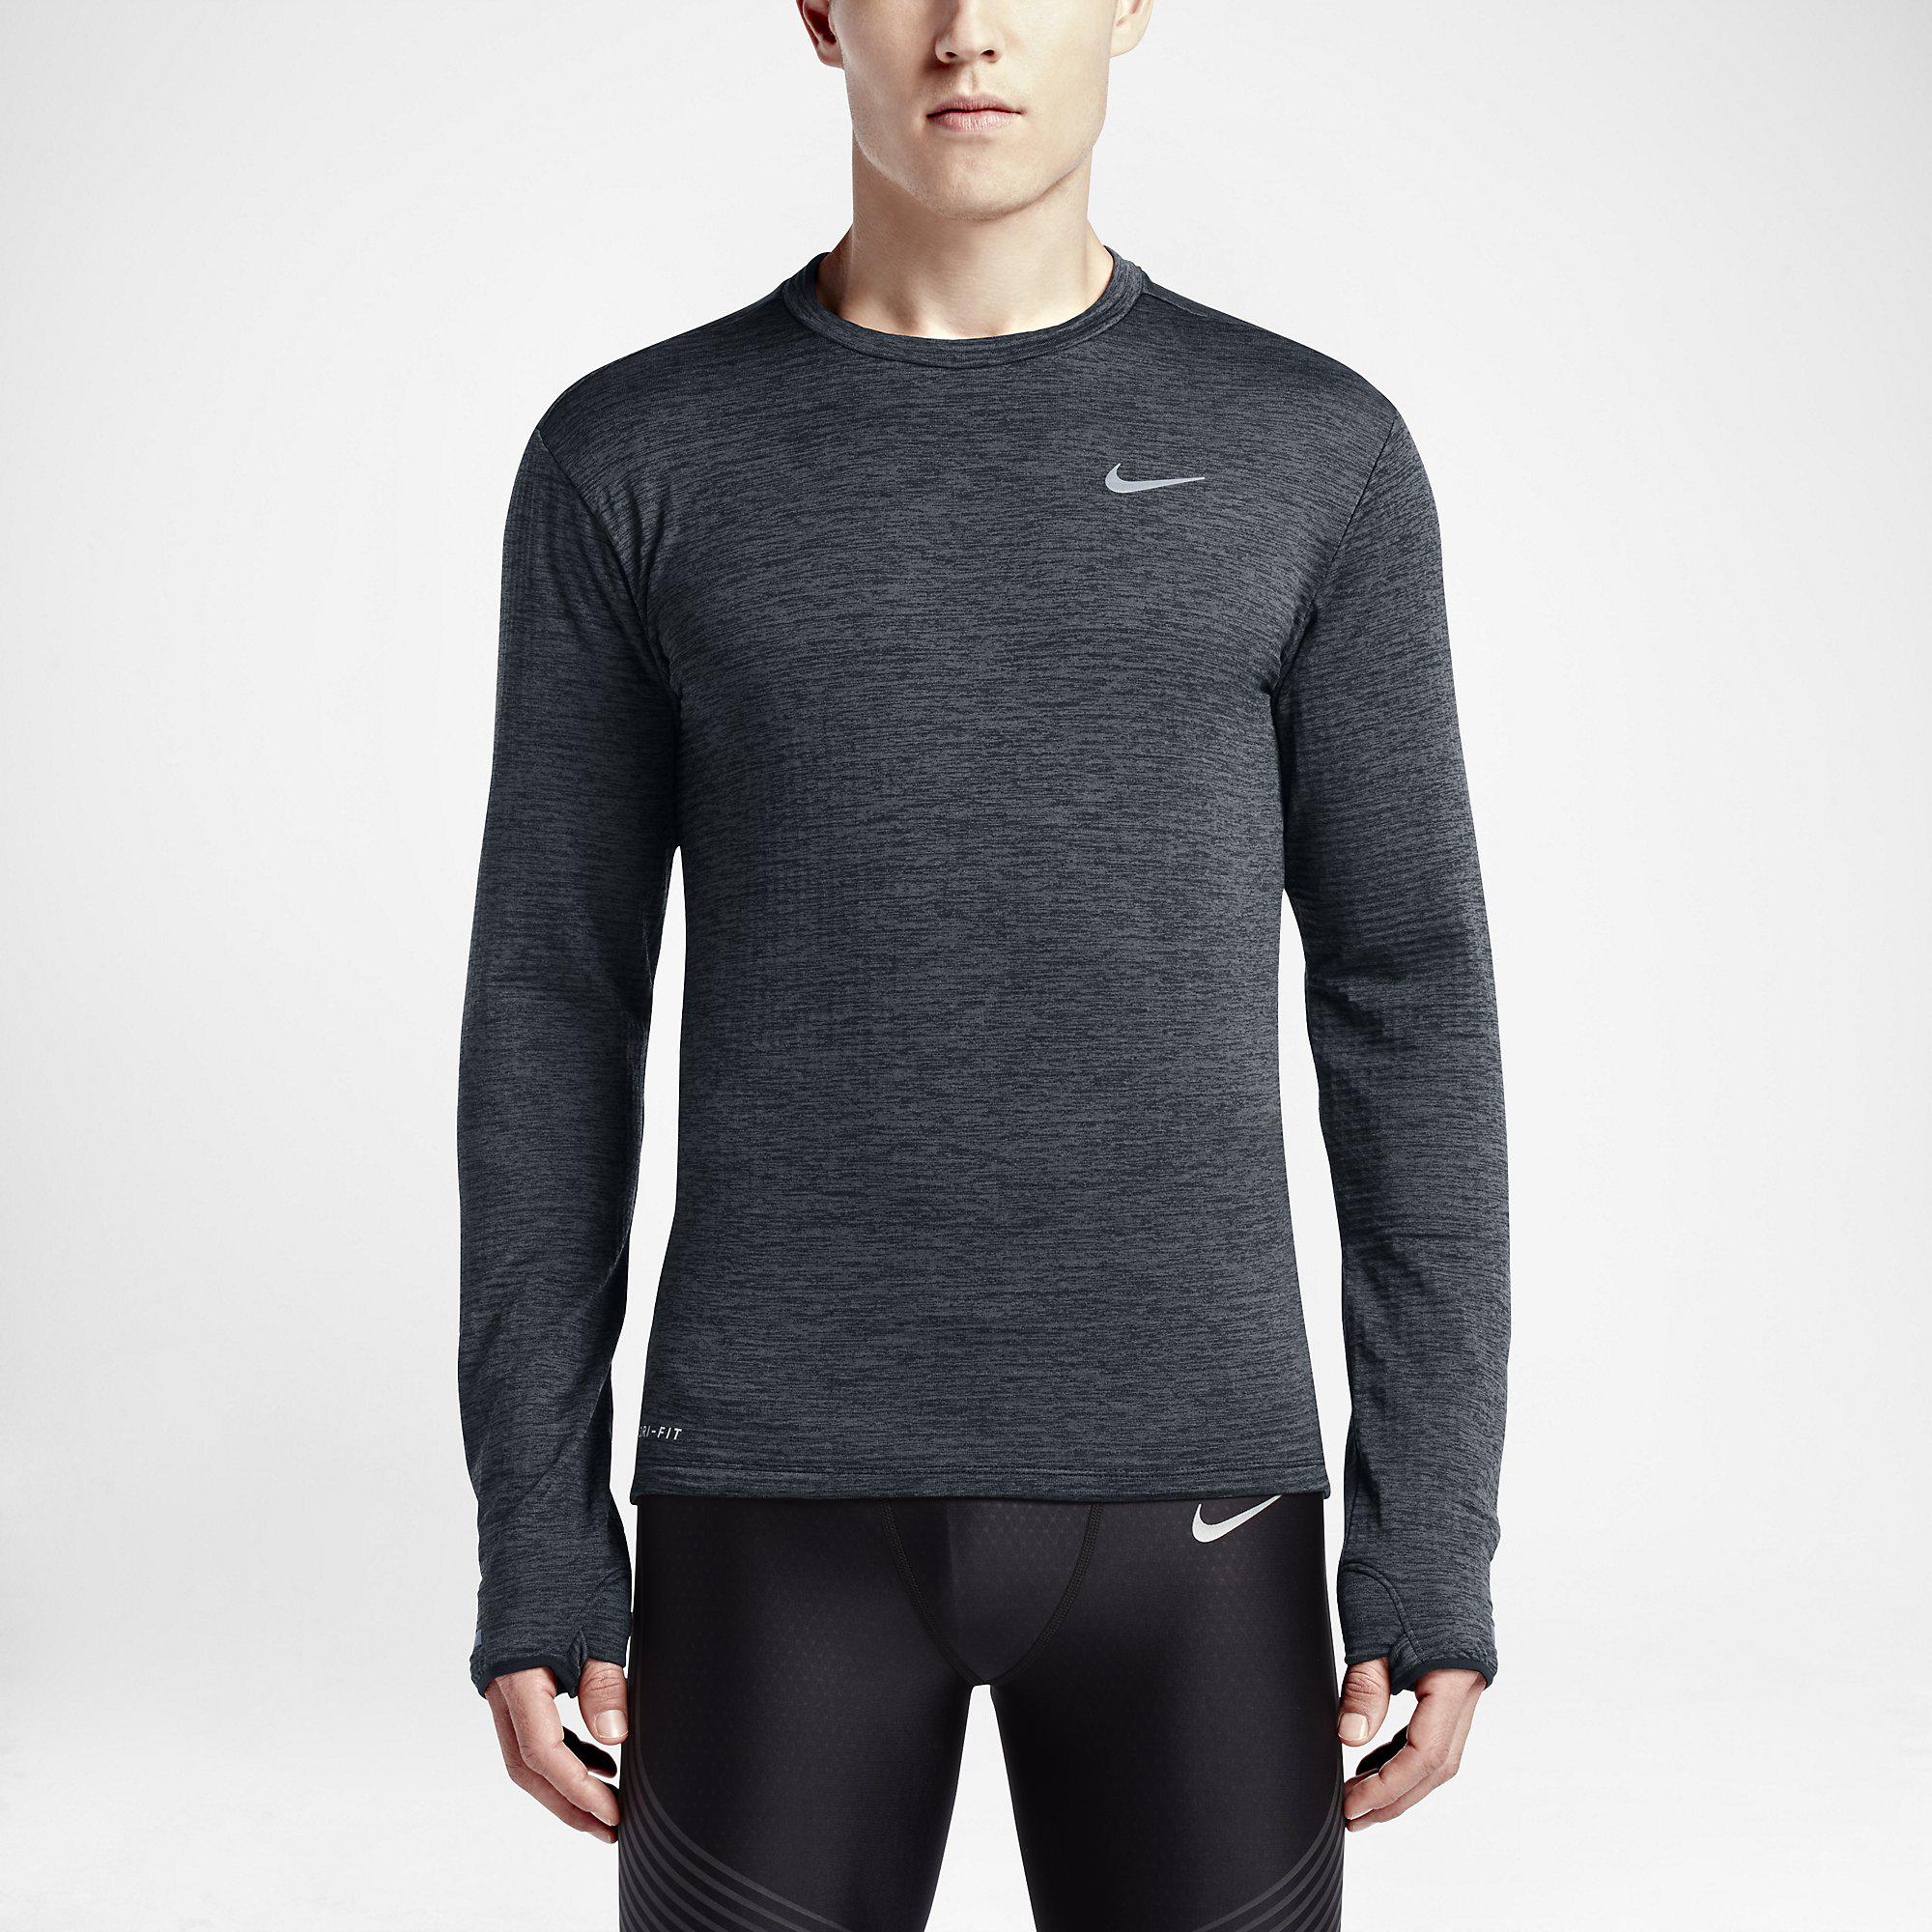 Nike Mens Element Running Top - Black/Heather - Tennisnuts.com